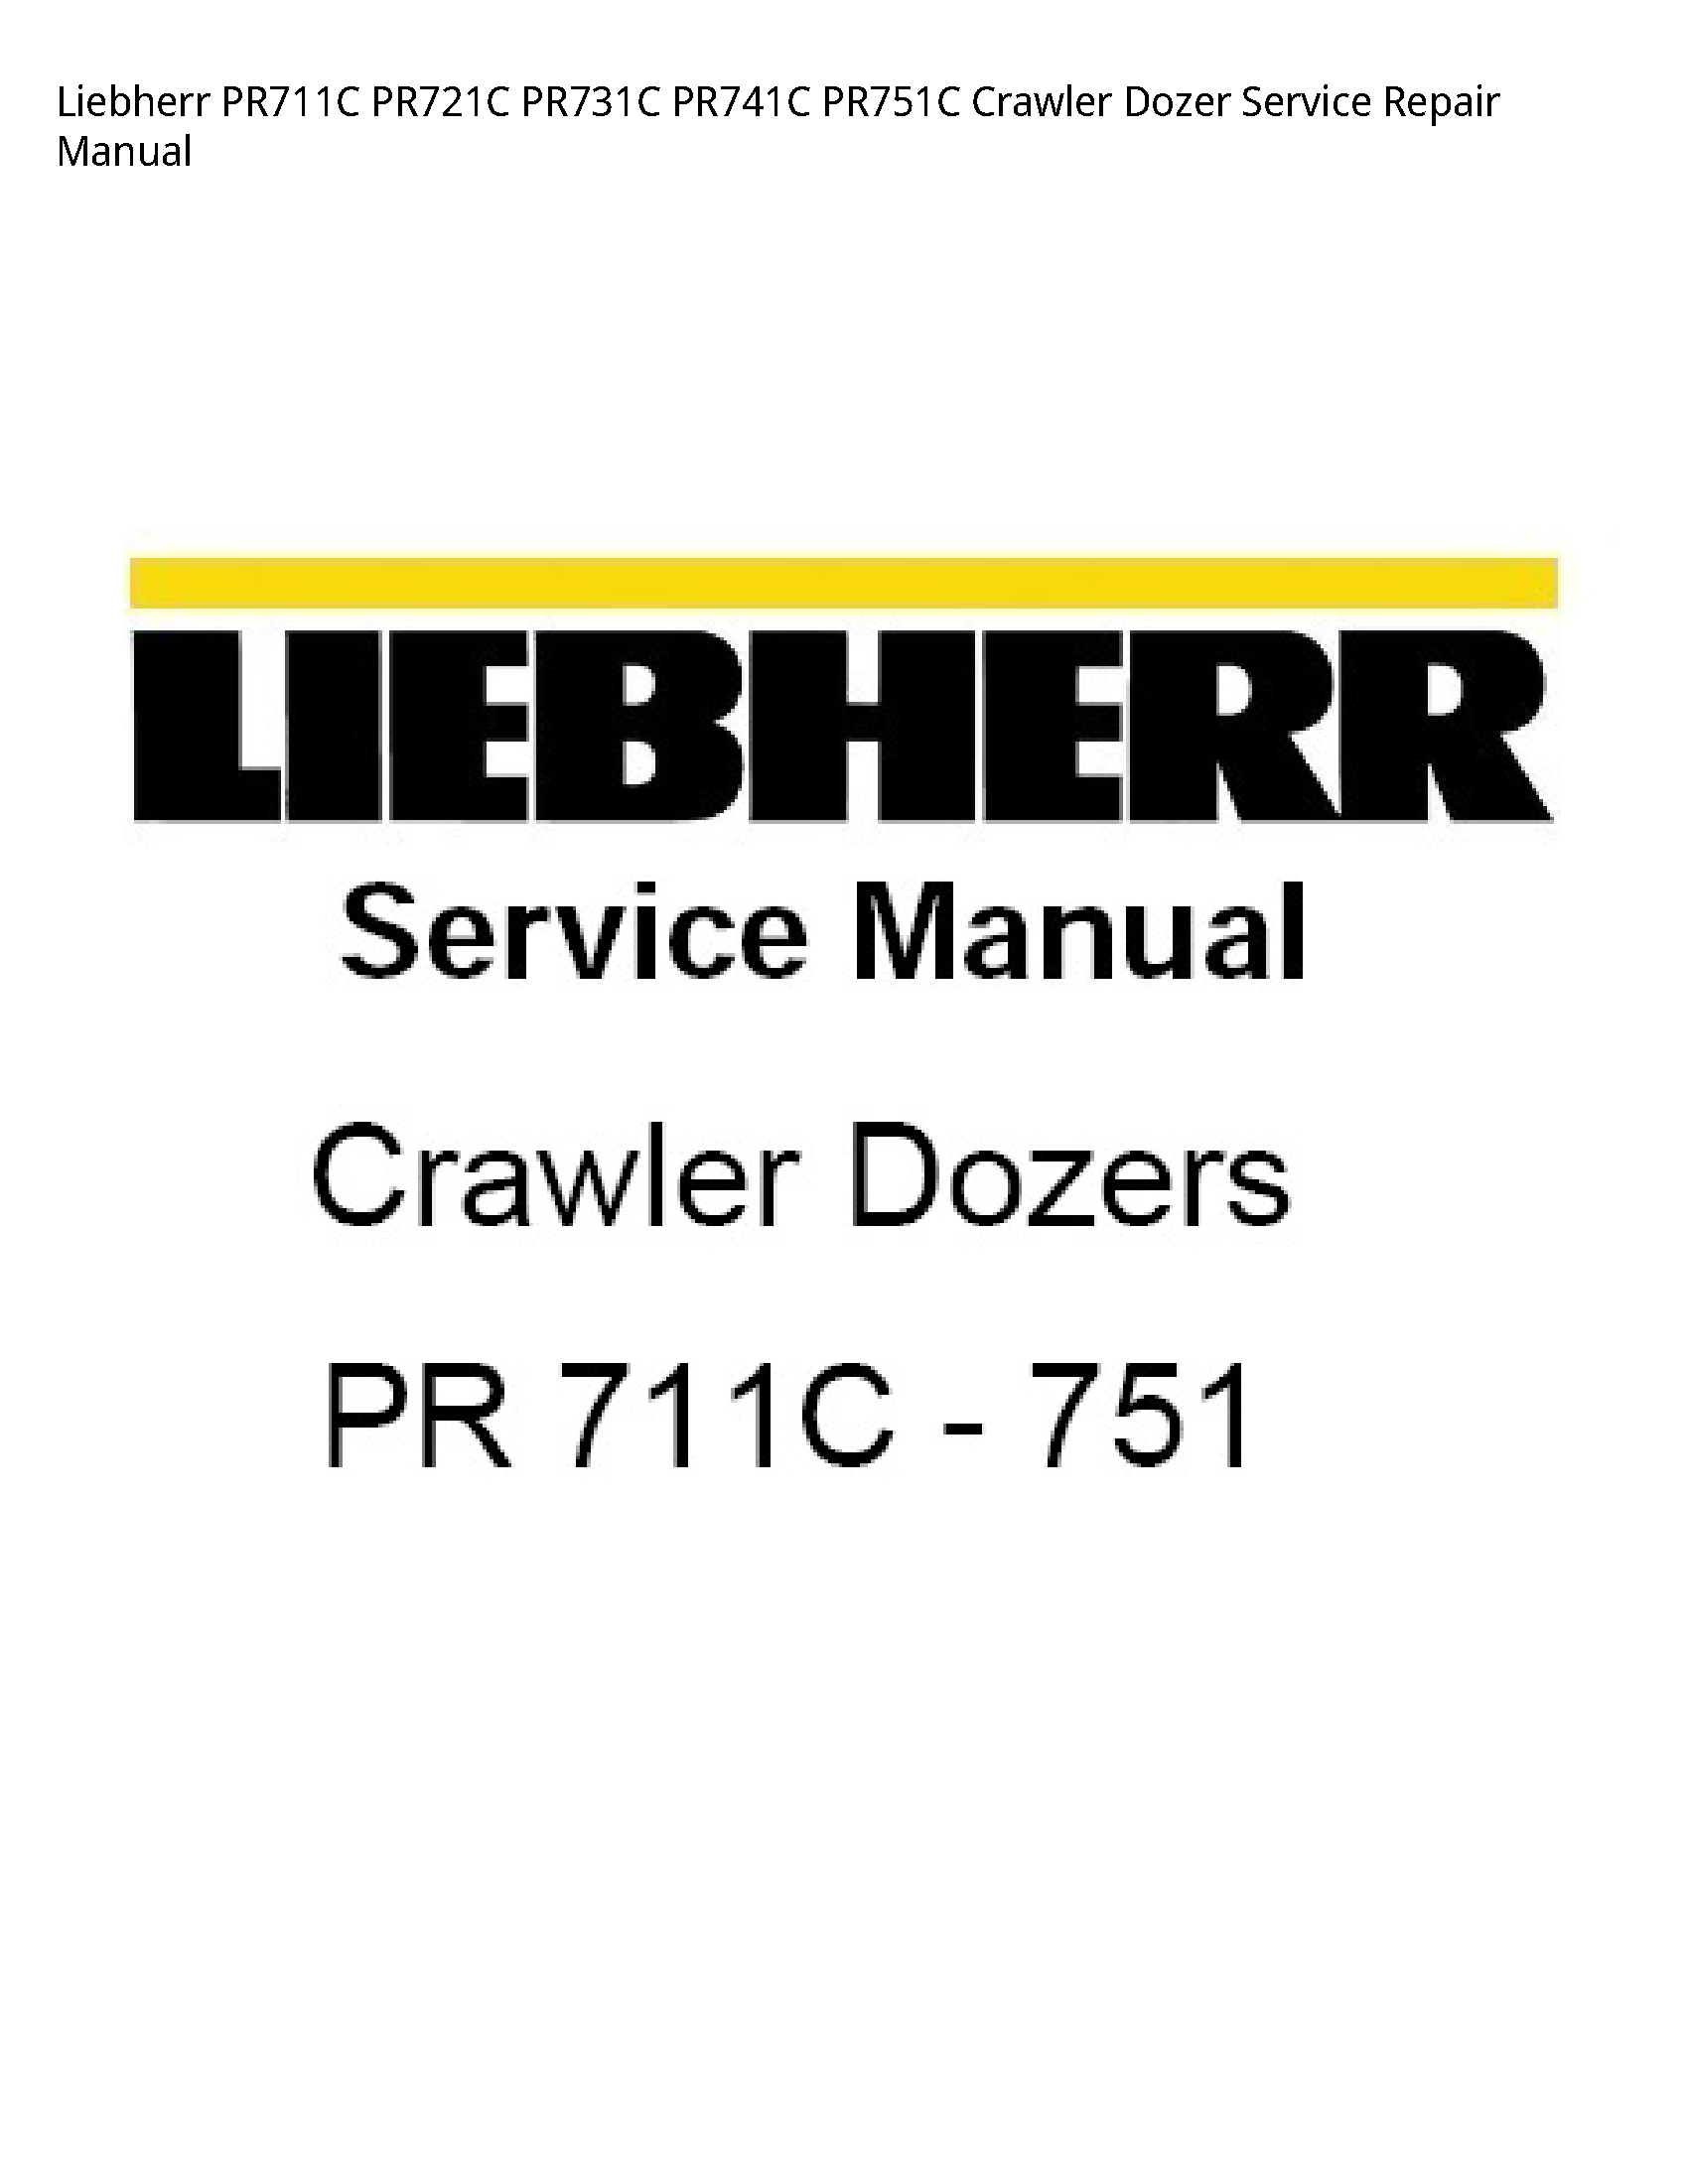 Liebherr PR711C Crawler Dozer manual